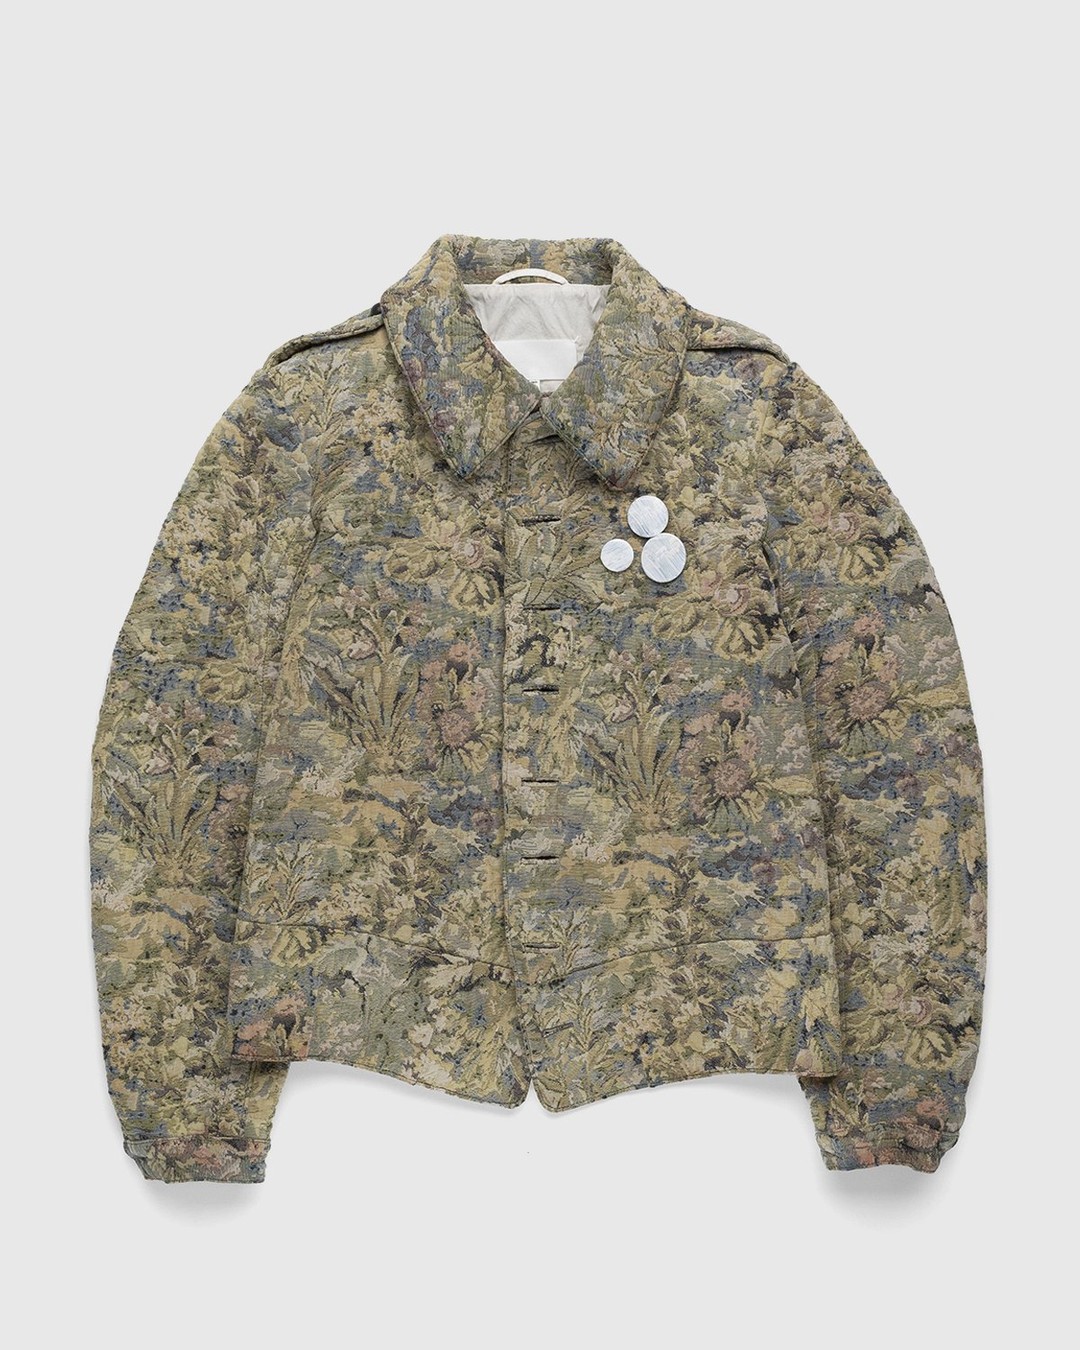 Maison Margiela – Brocade Essorage Jacket - Outerwear - Green - Image 1